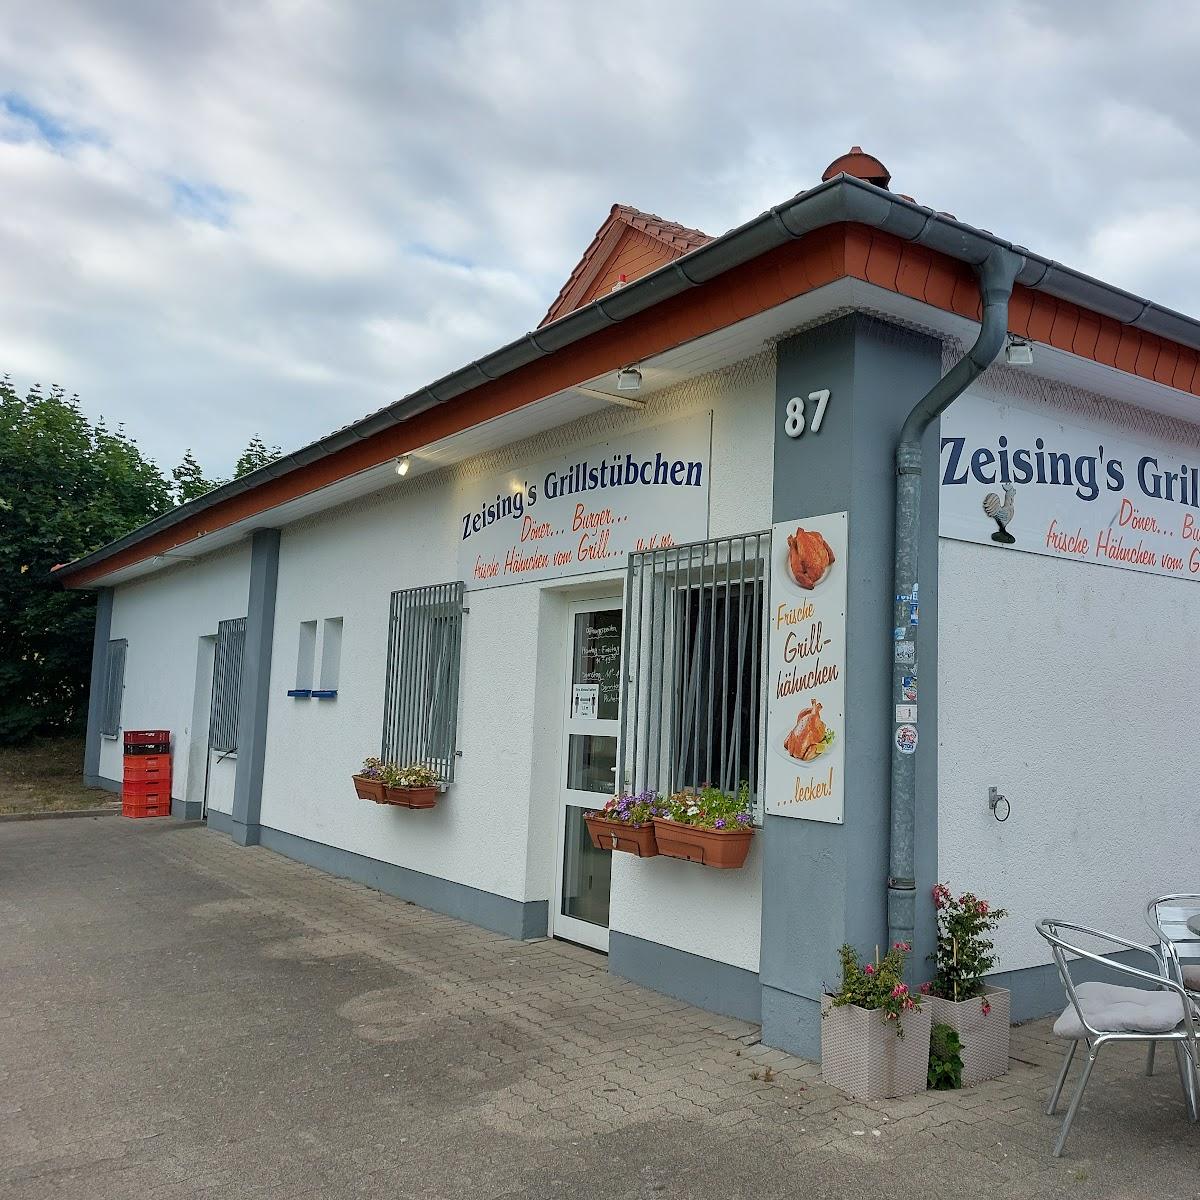 Restaurant "Zeising